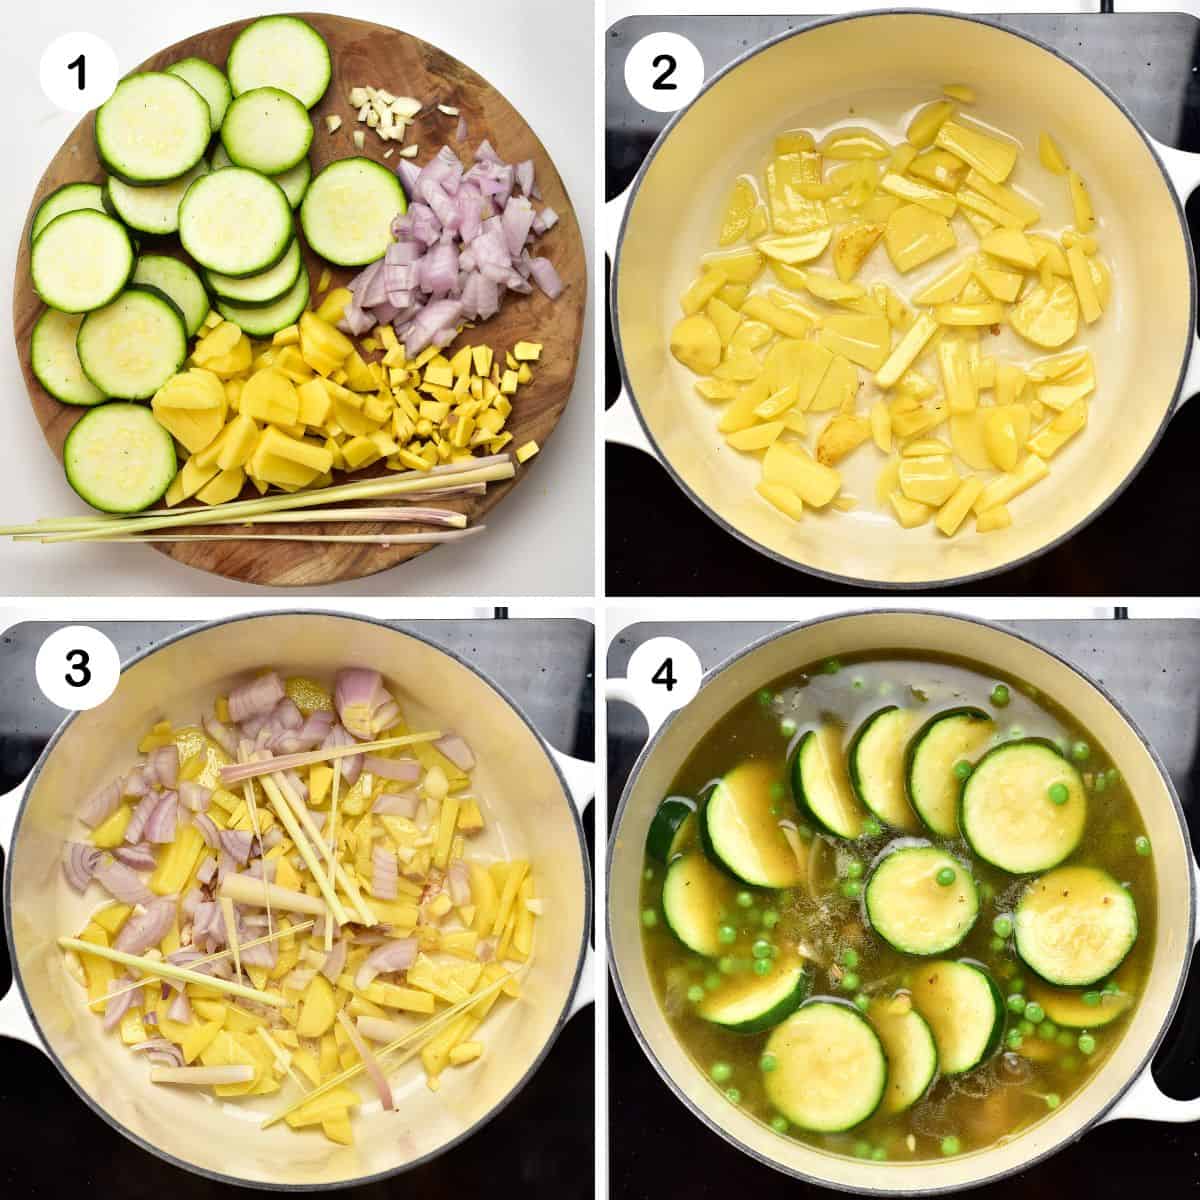 Steps for sautéing and simmering vegetables